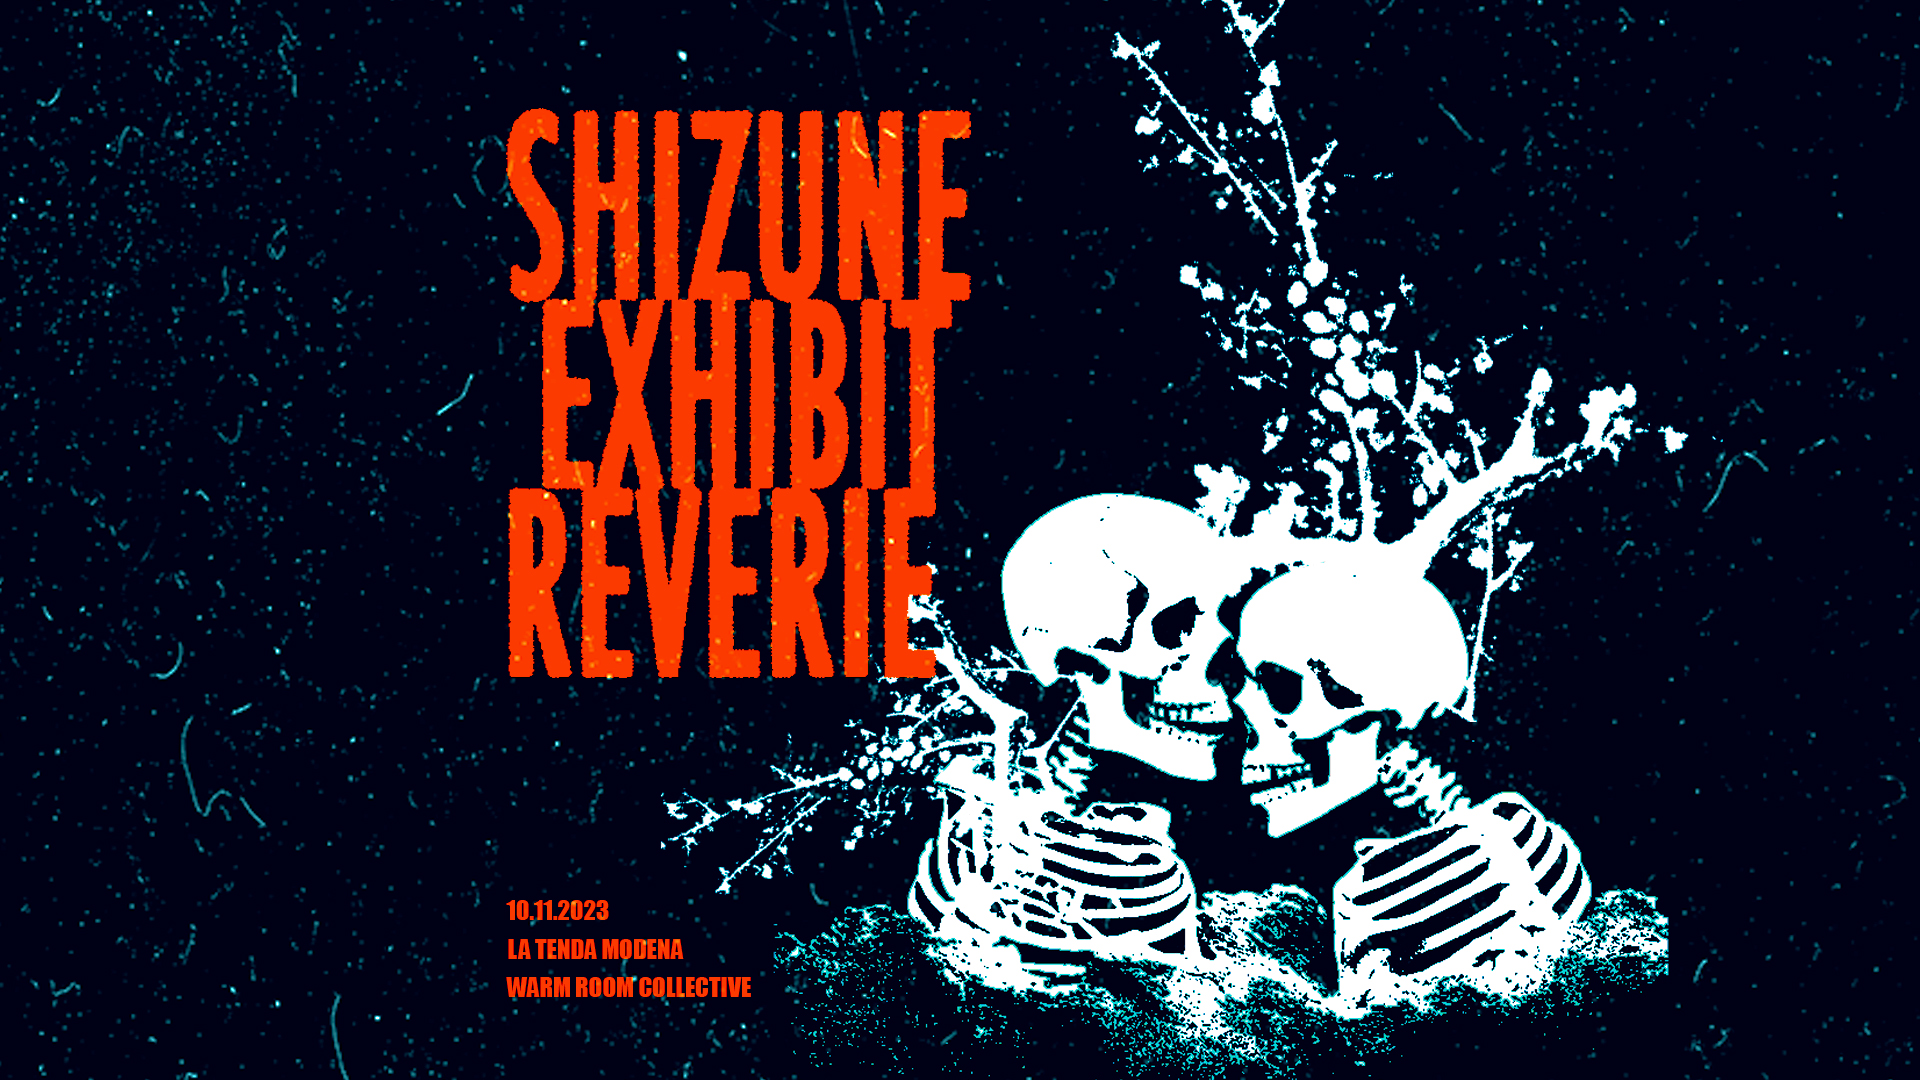 Shizune + Exhibit + Reverie